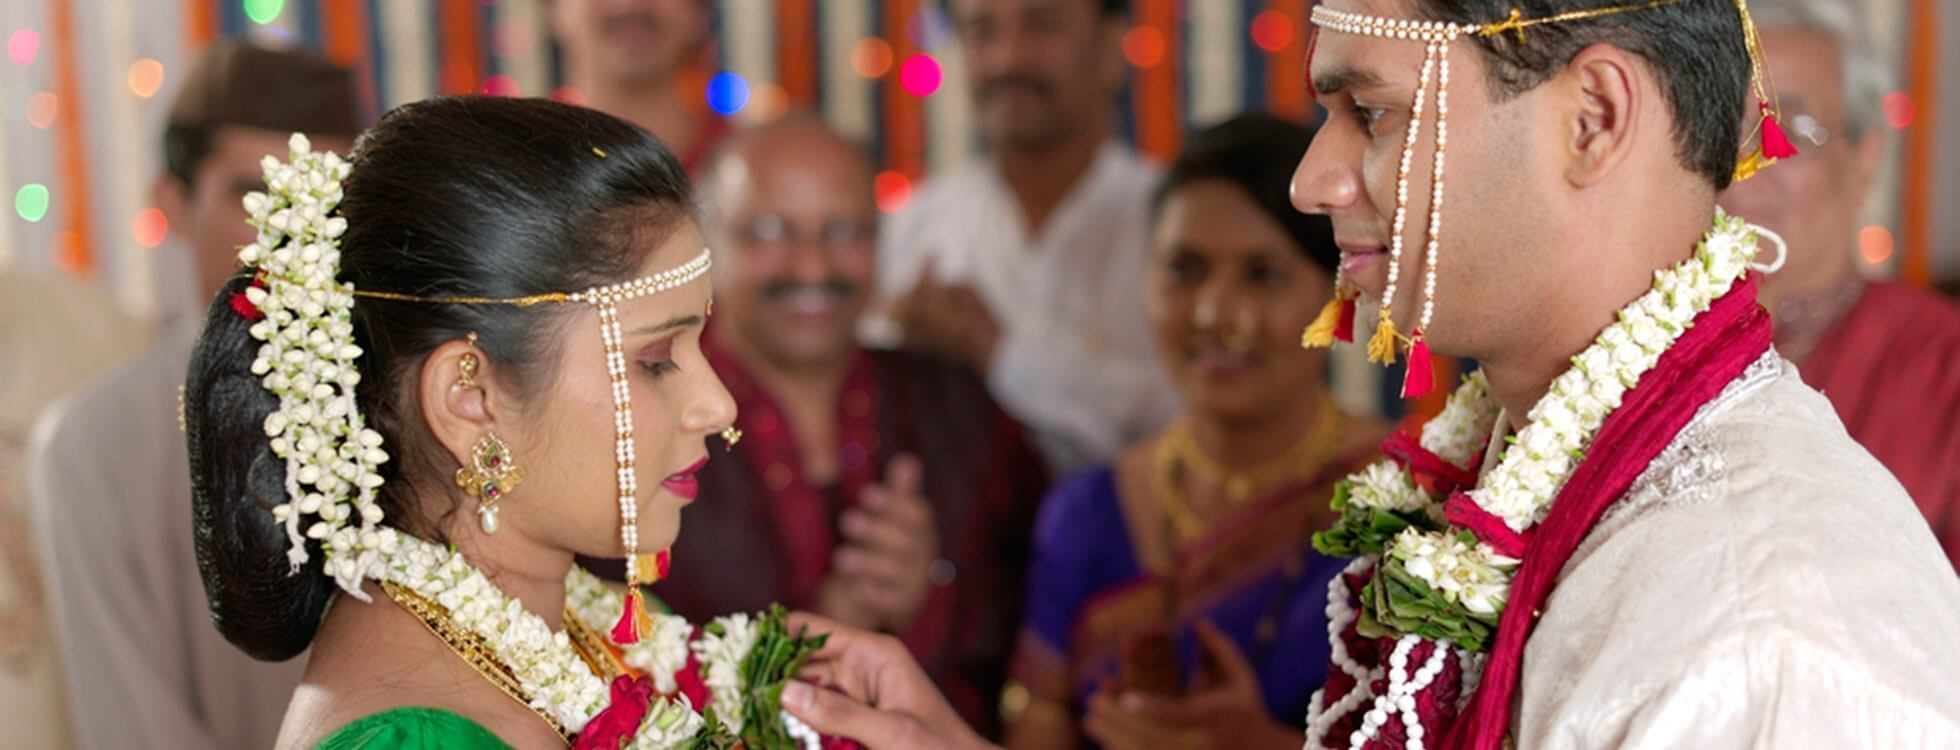 Hindu Matrimony